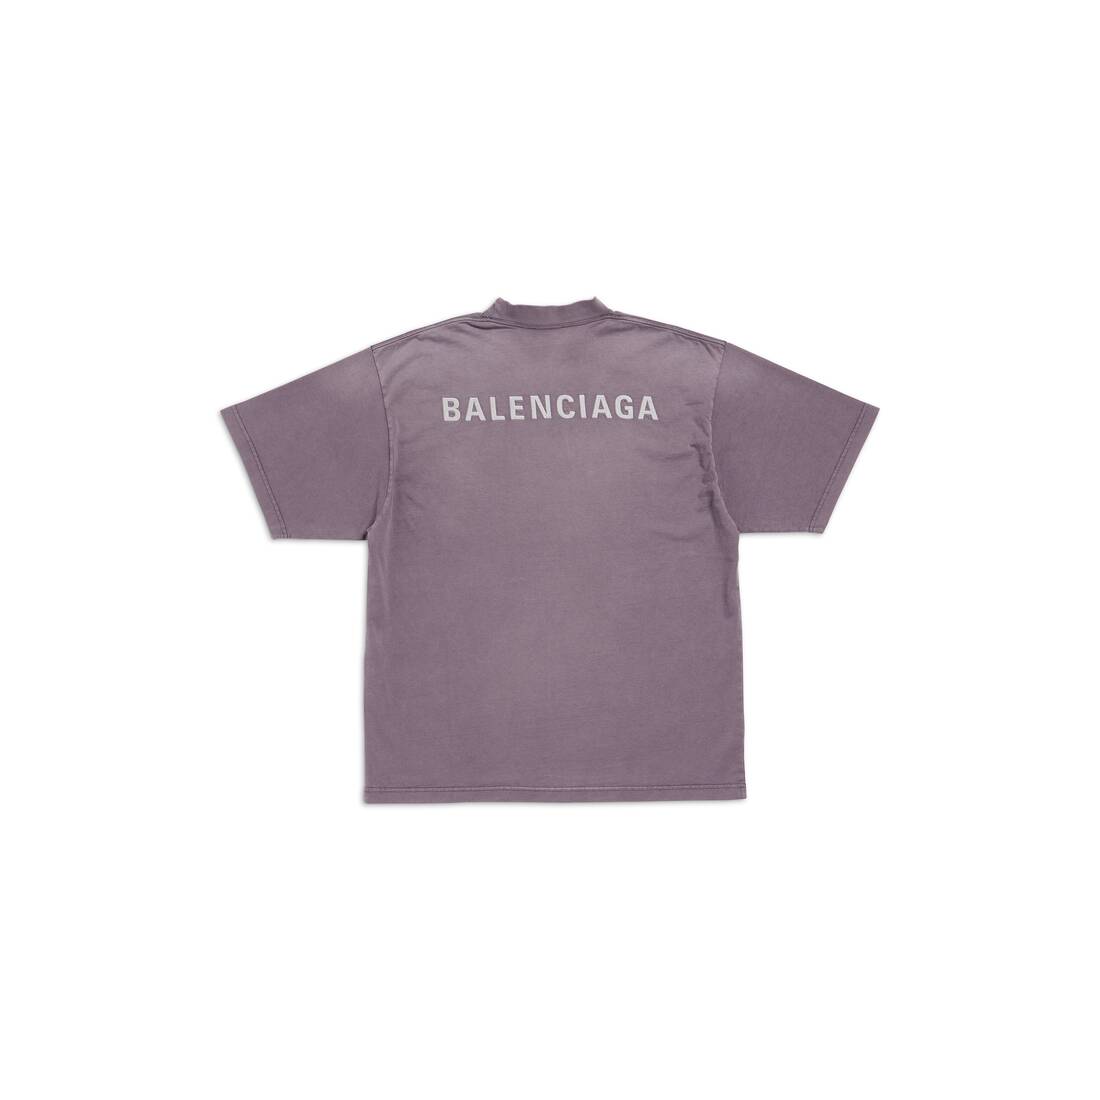 Balenciaga Back Tシャツ ミディアムフィット で 杢パープル